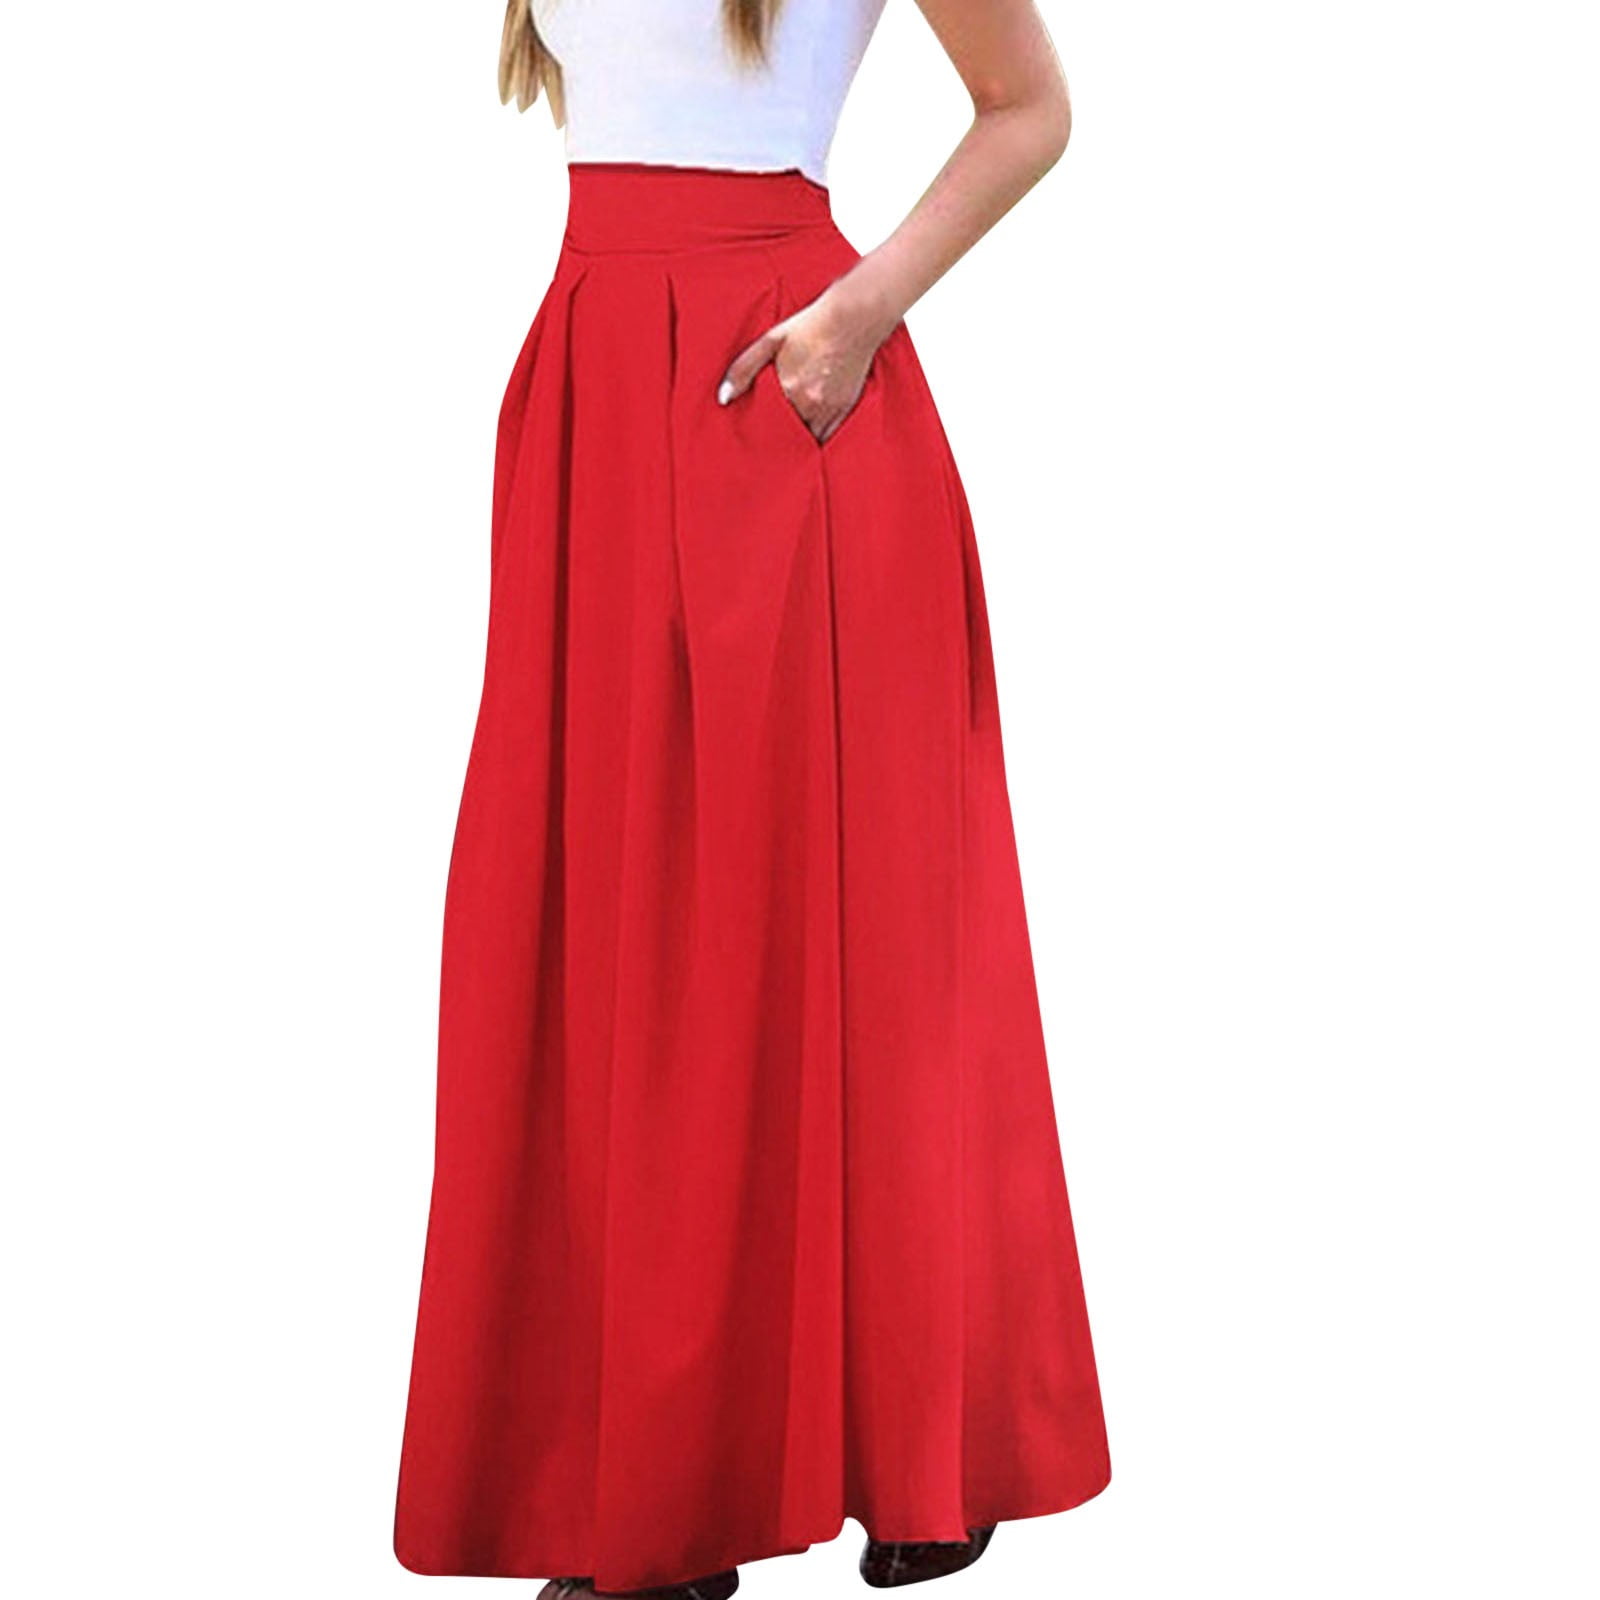 kpoplk Long Skirts for Women, Women Floral Print High Waist Pocket Boho  Maxi Skirt Party Beach Long Skirt Robe Lace Loose Woman(Red)